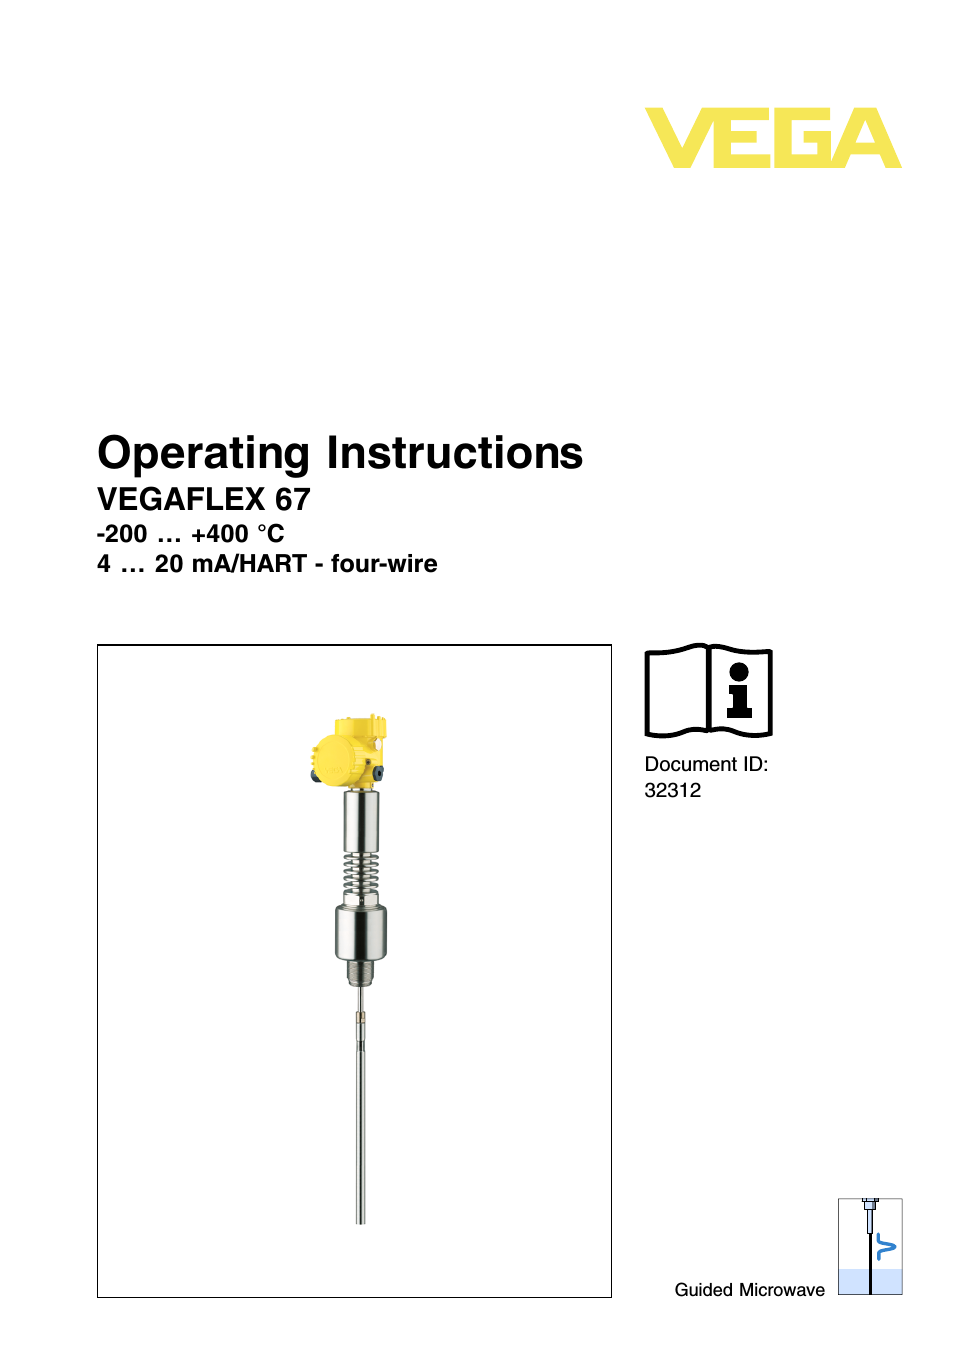 VEGAFLEX 67 (-200…+400°C) 4 … 20 mA_HART four-wire